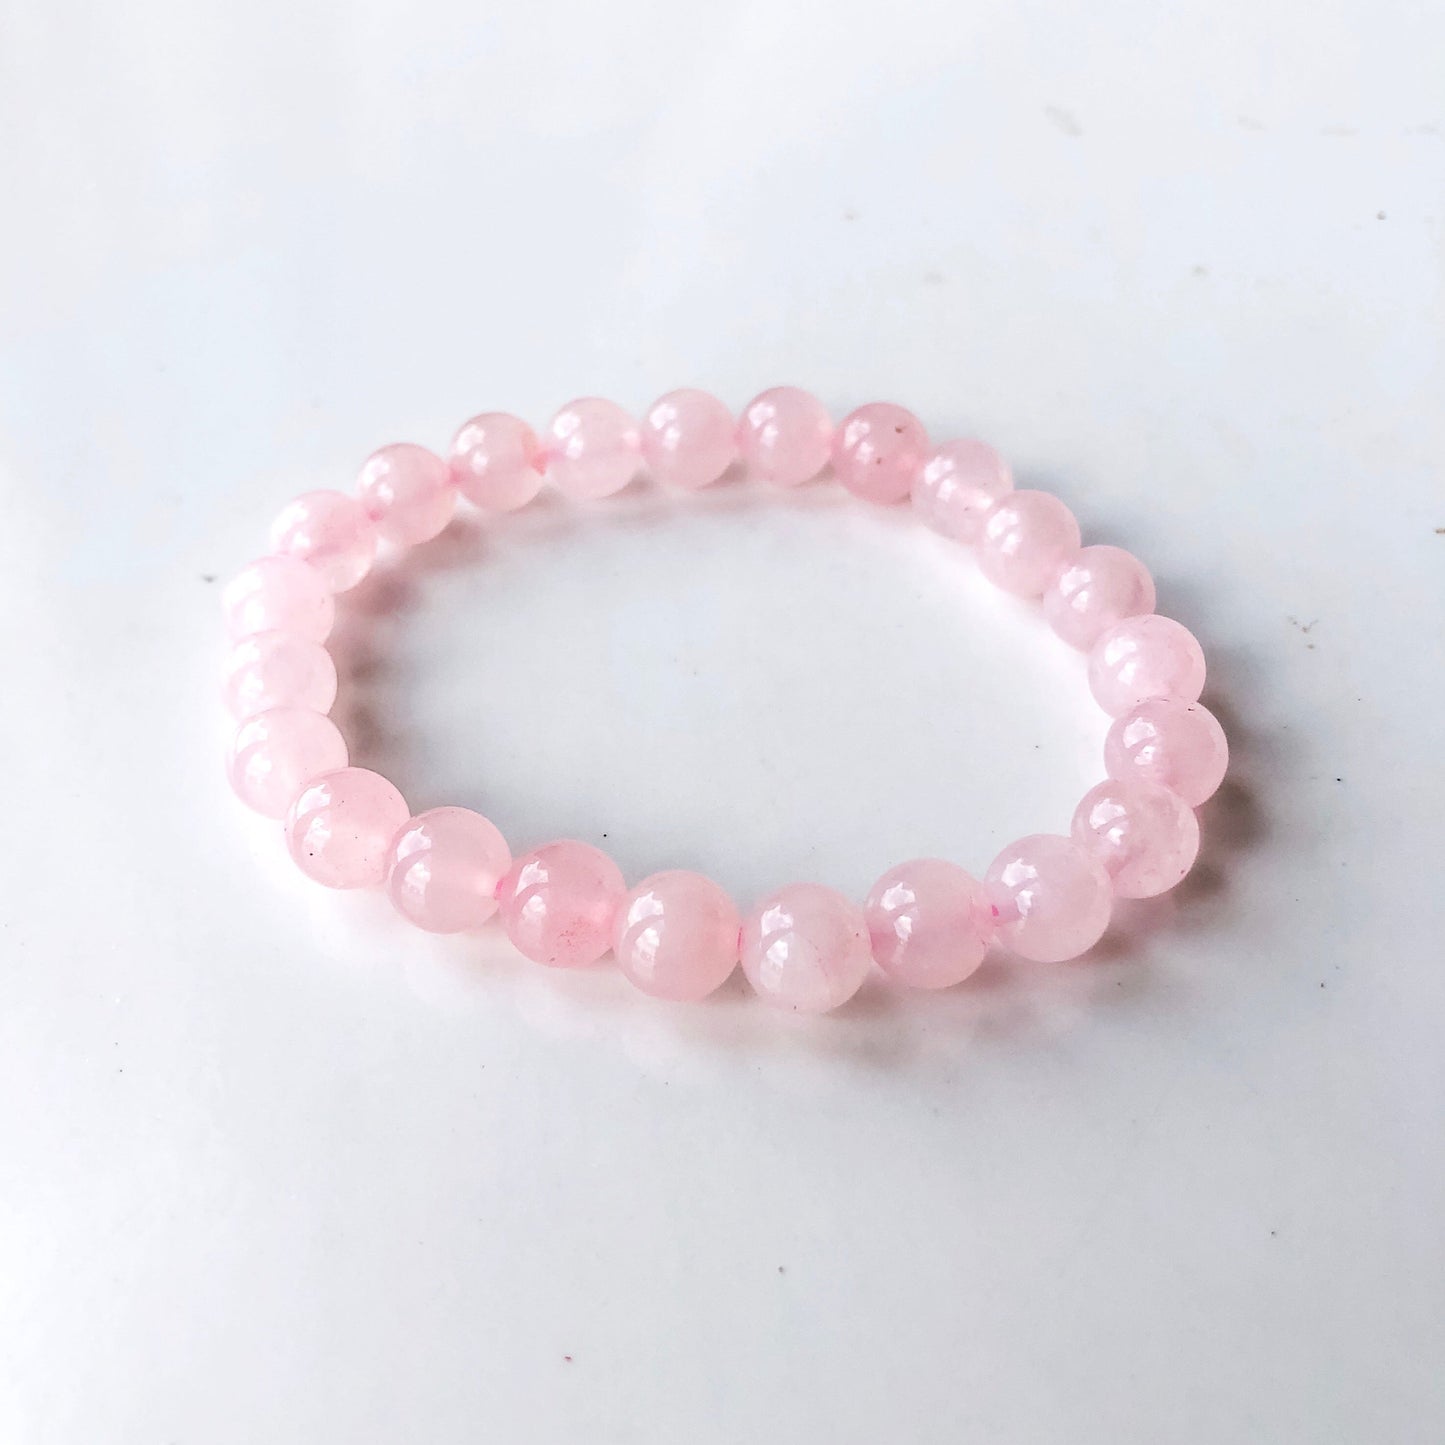 Crystal Beads Bracelet - Rose Quartz